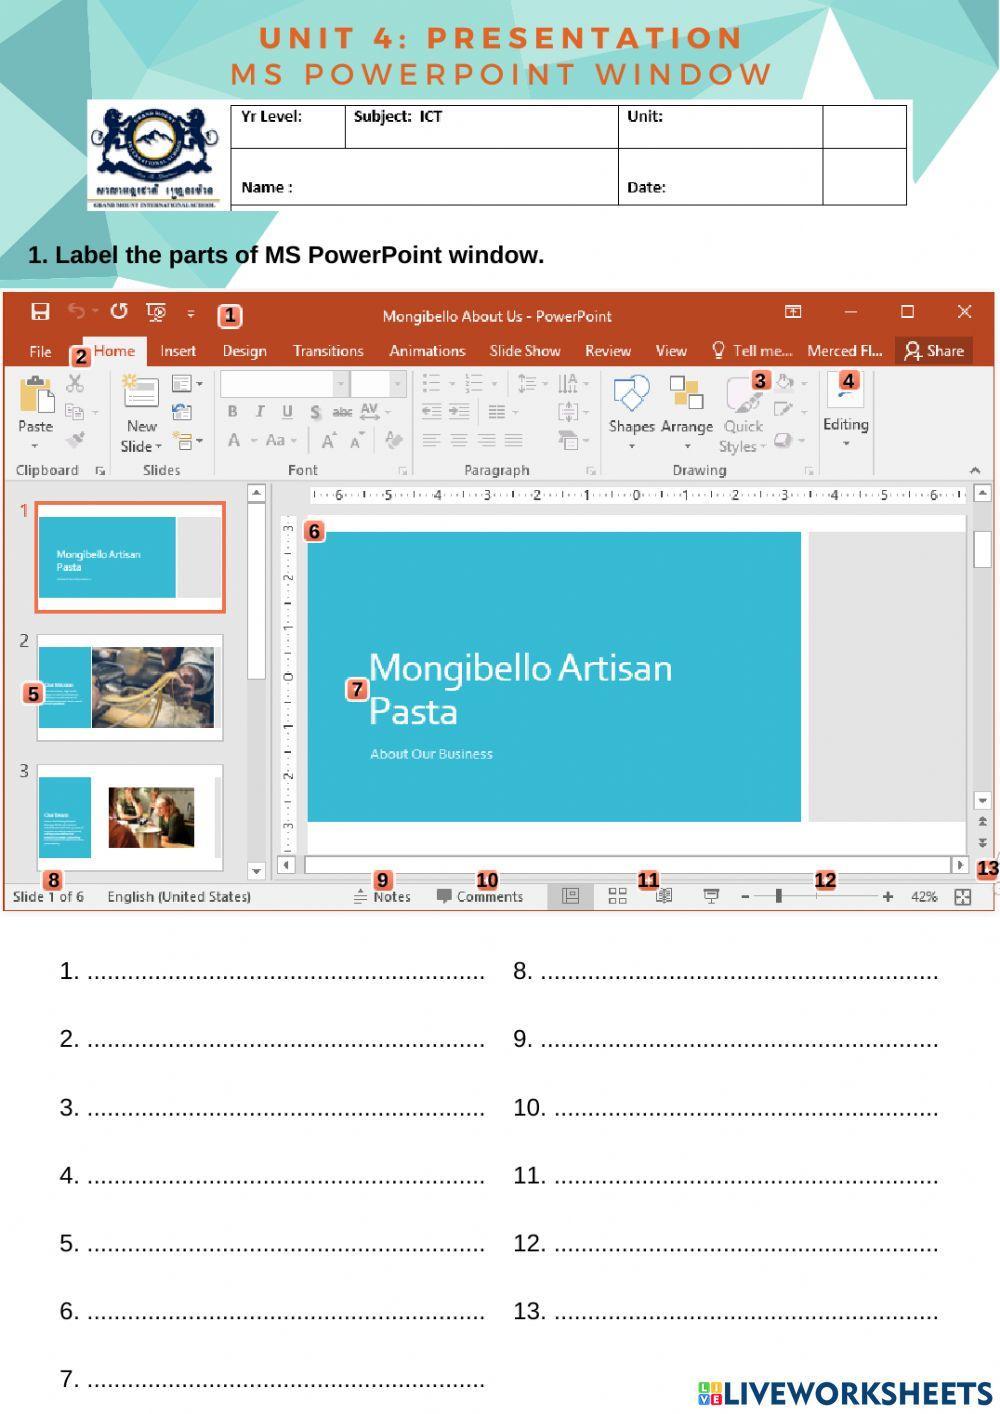 Presentation: MS PowerPoint Window